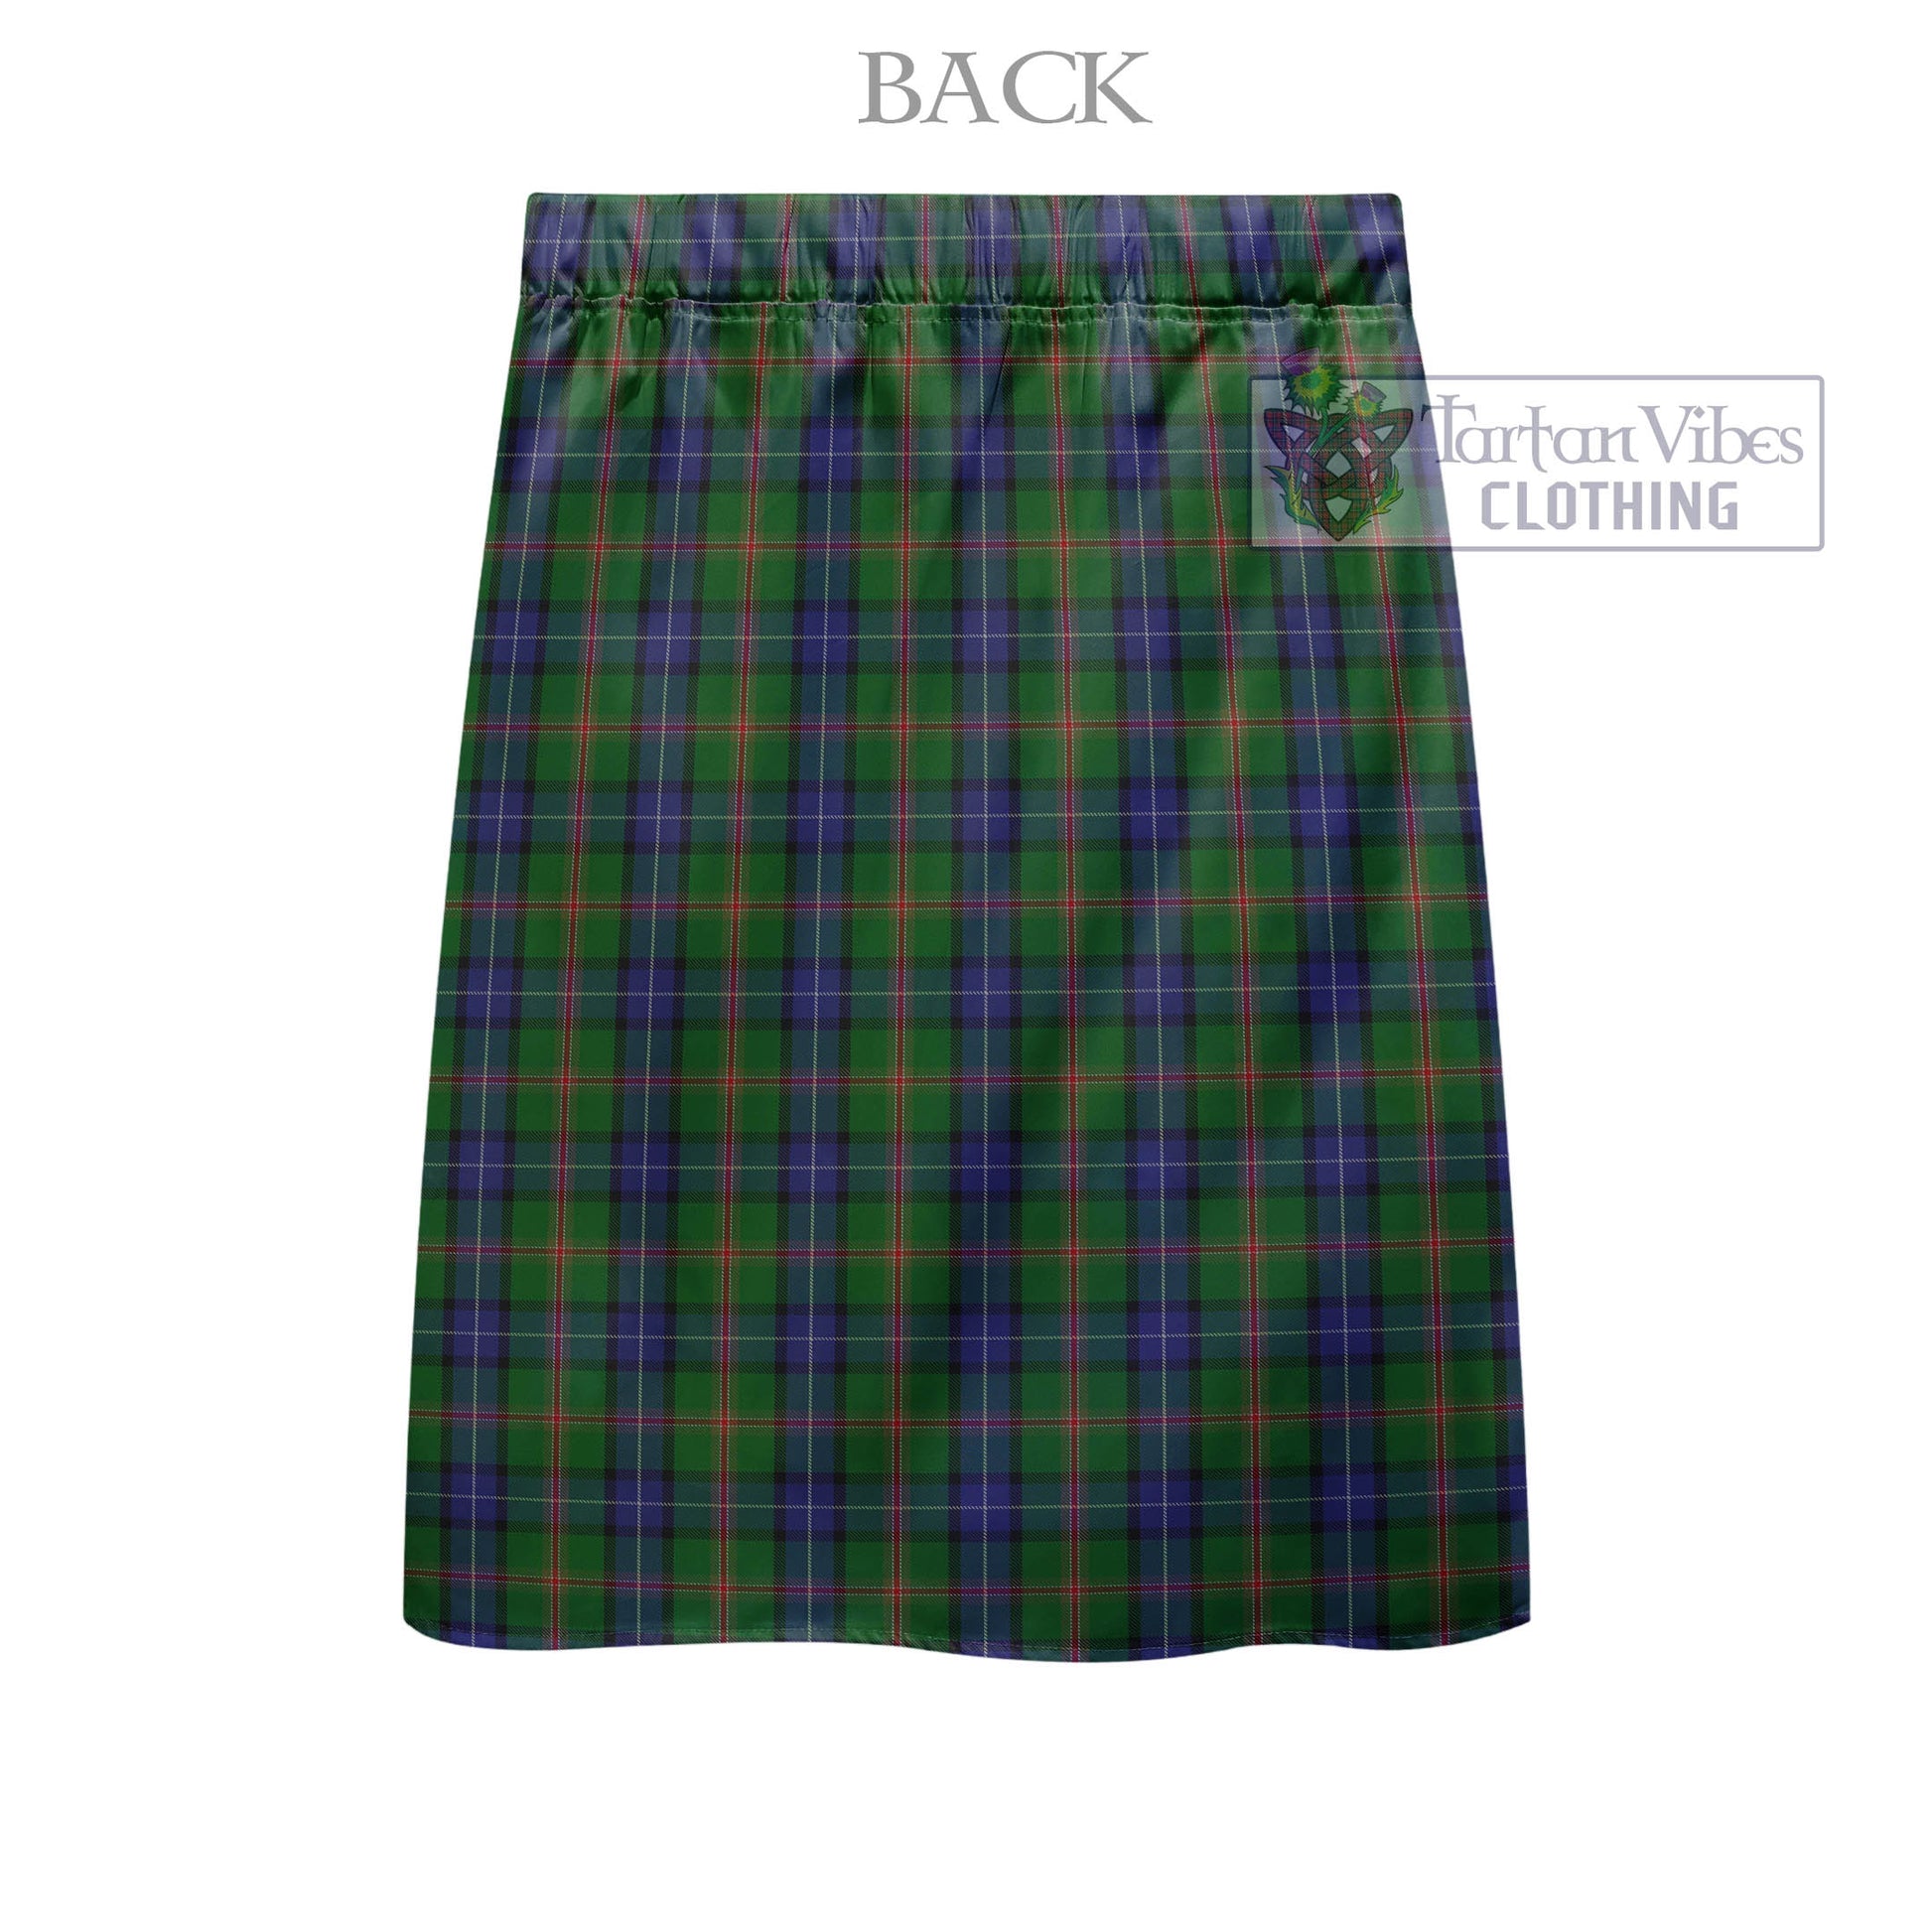 Tartan Vibes Clothing Jones Tartan Men's Pleated Skirt - Fashion Casual Retro Scottish Style